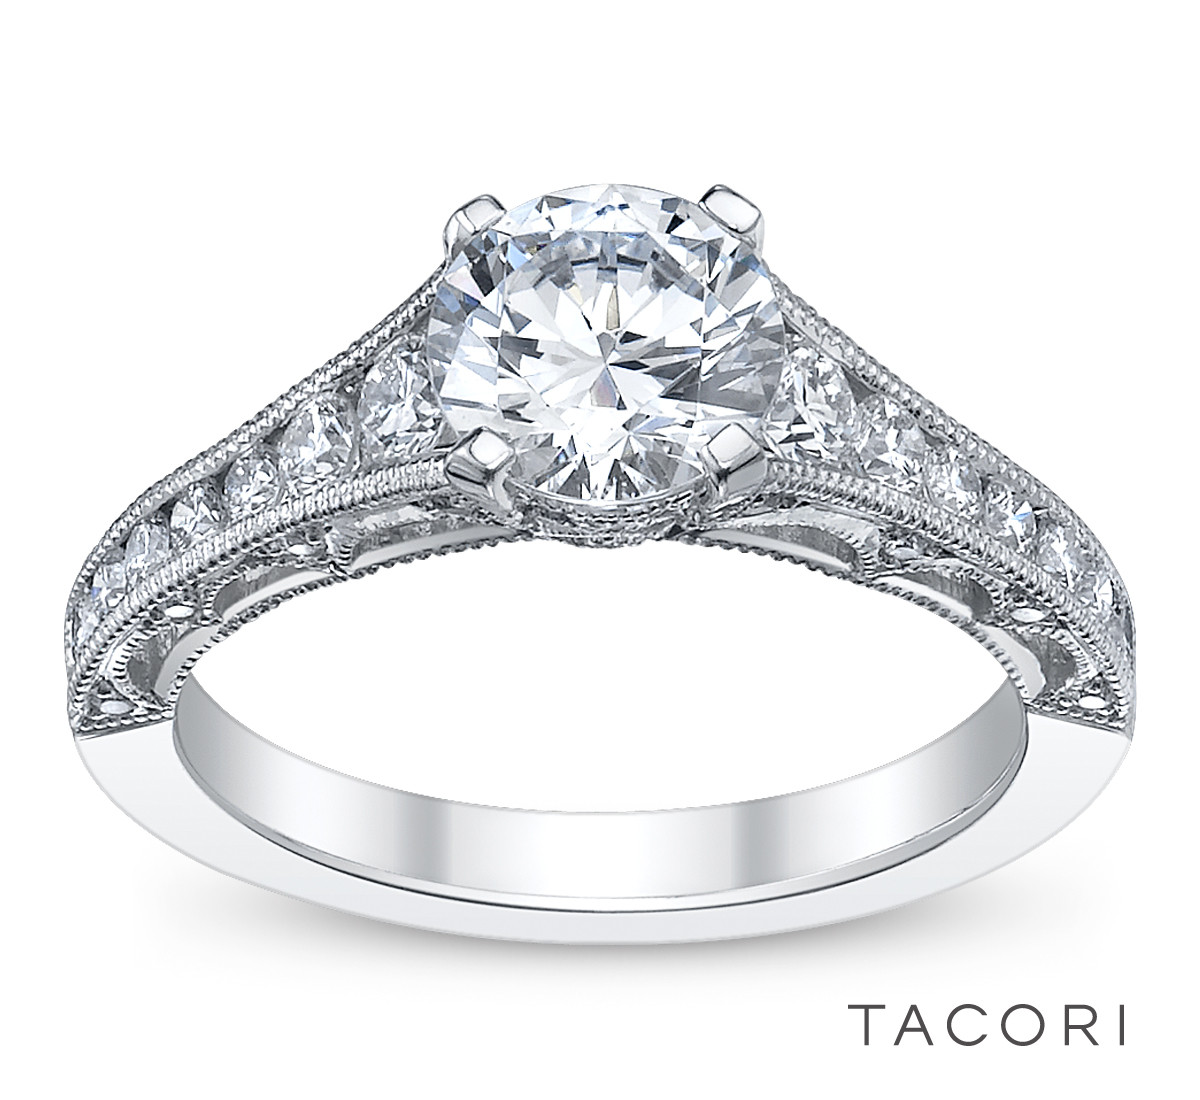 Tacori Wedding Ring
 Engagement Ring of the Day Tacori Robbins Brothers Blog